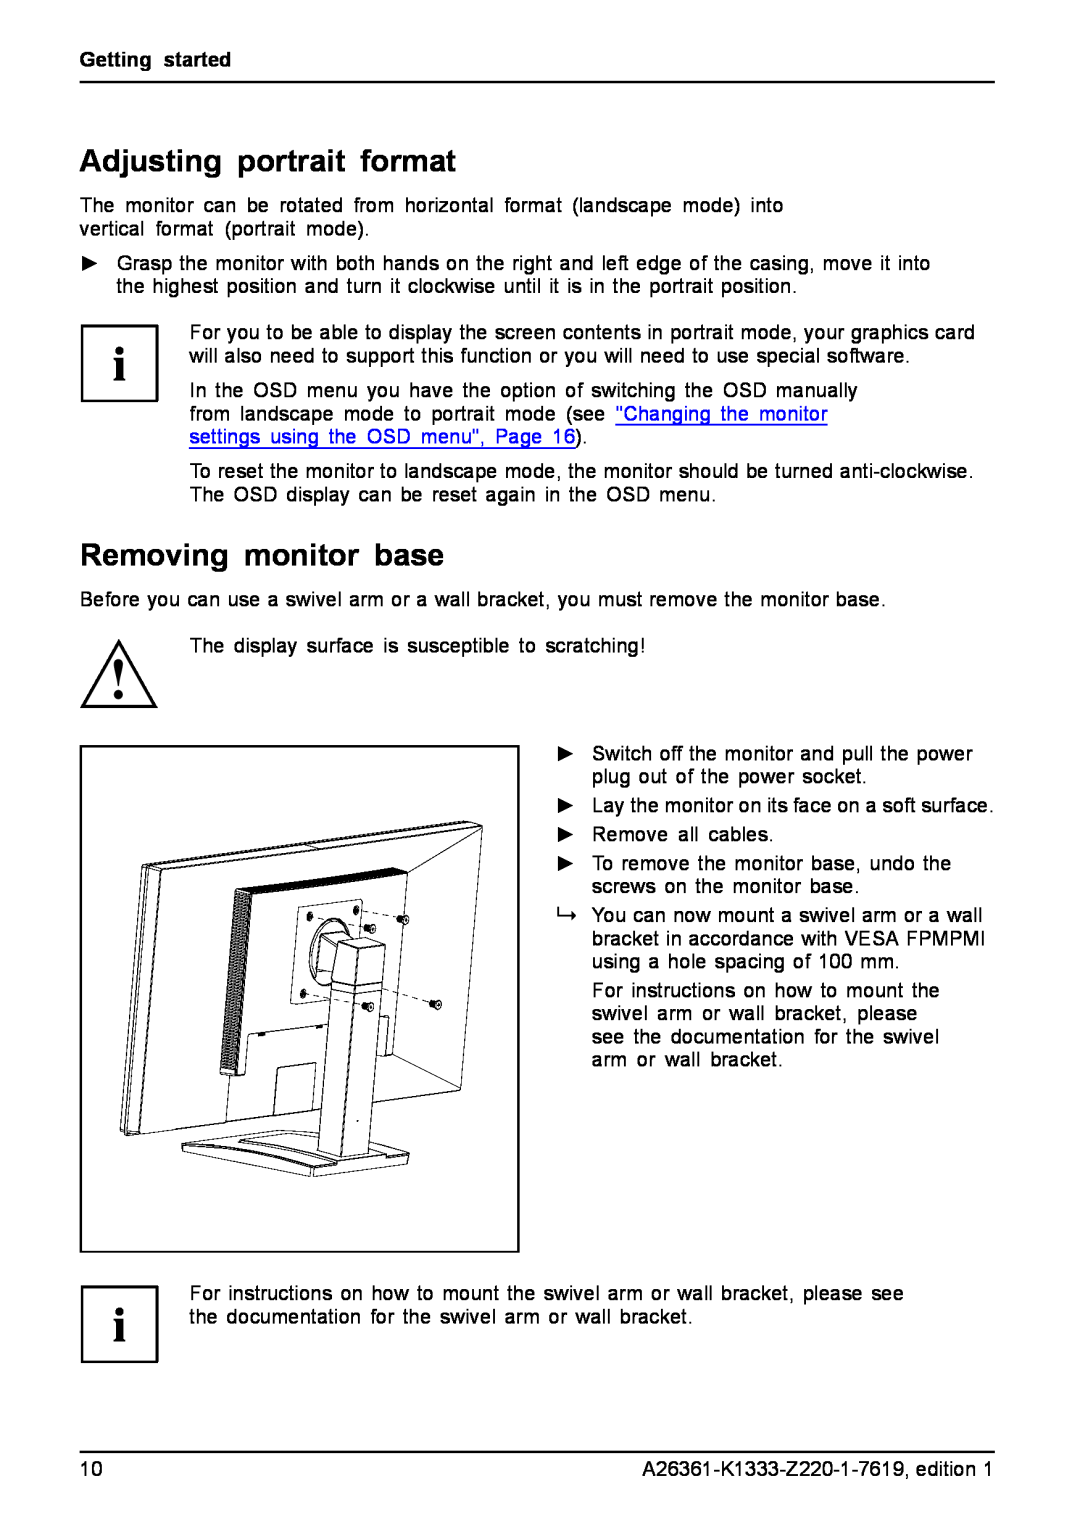 Fujitsu B19W-5 ECO manual Adjusting portrait format, Removing monitor base, Getting started 